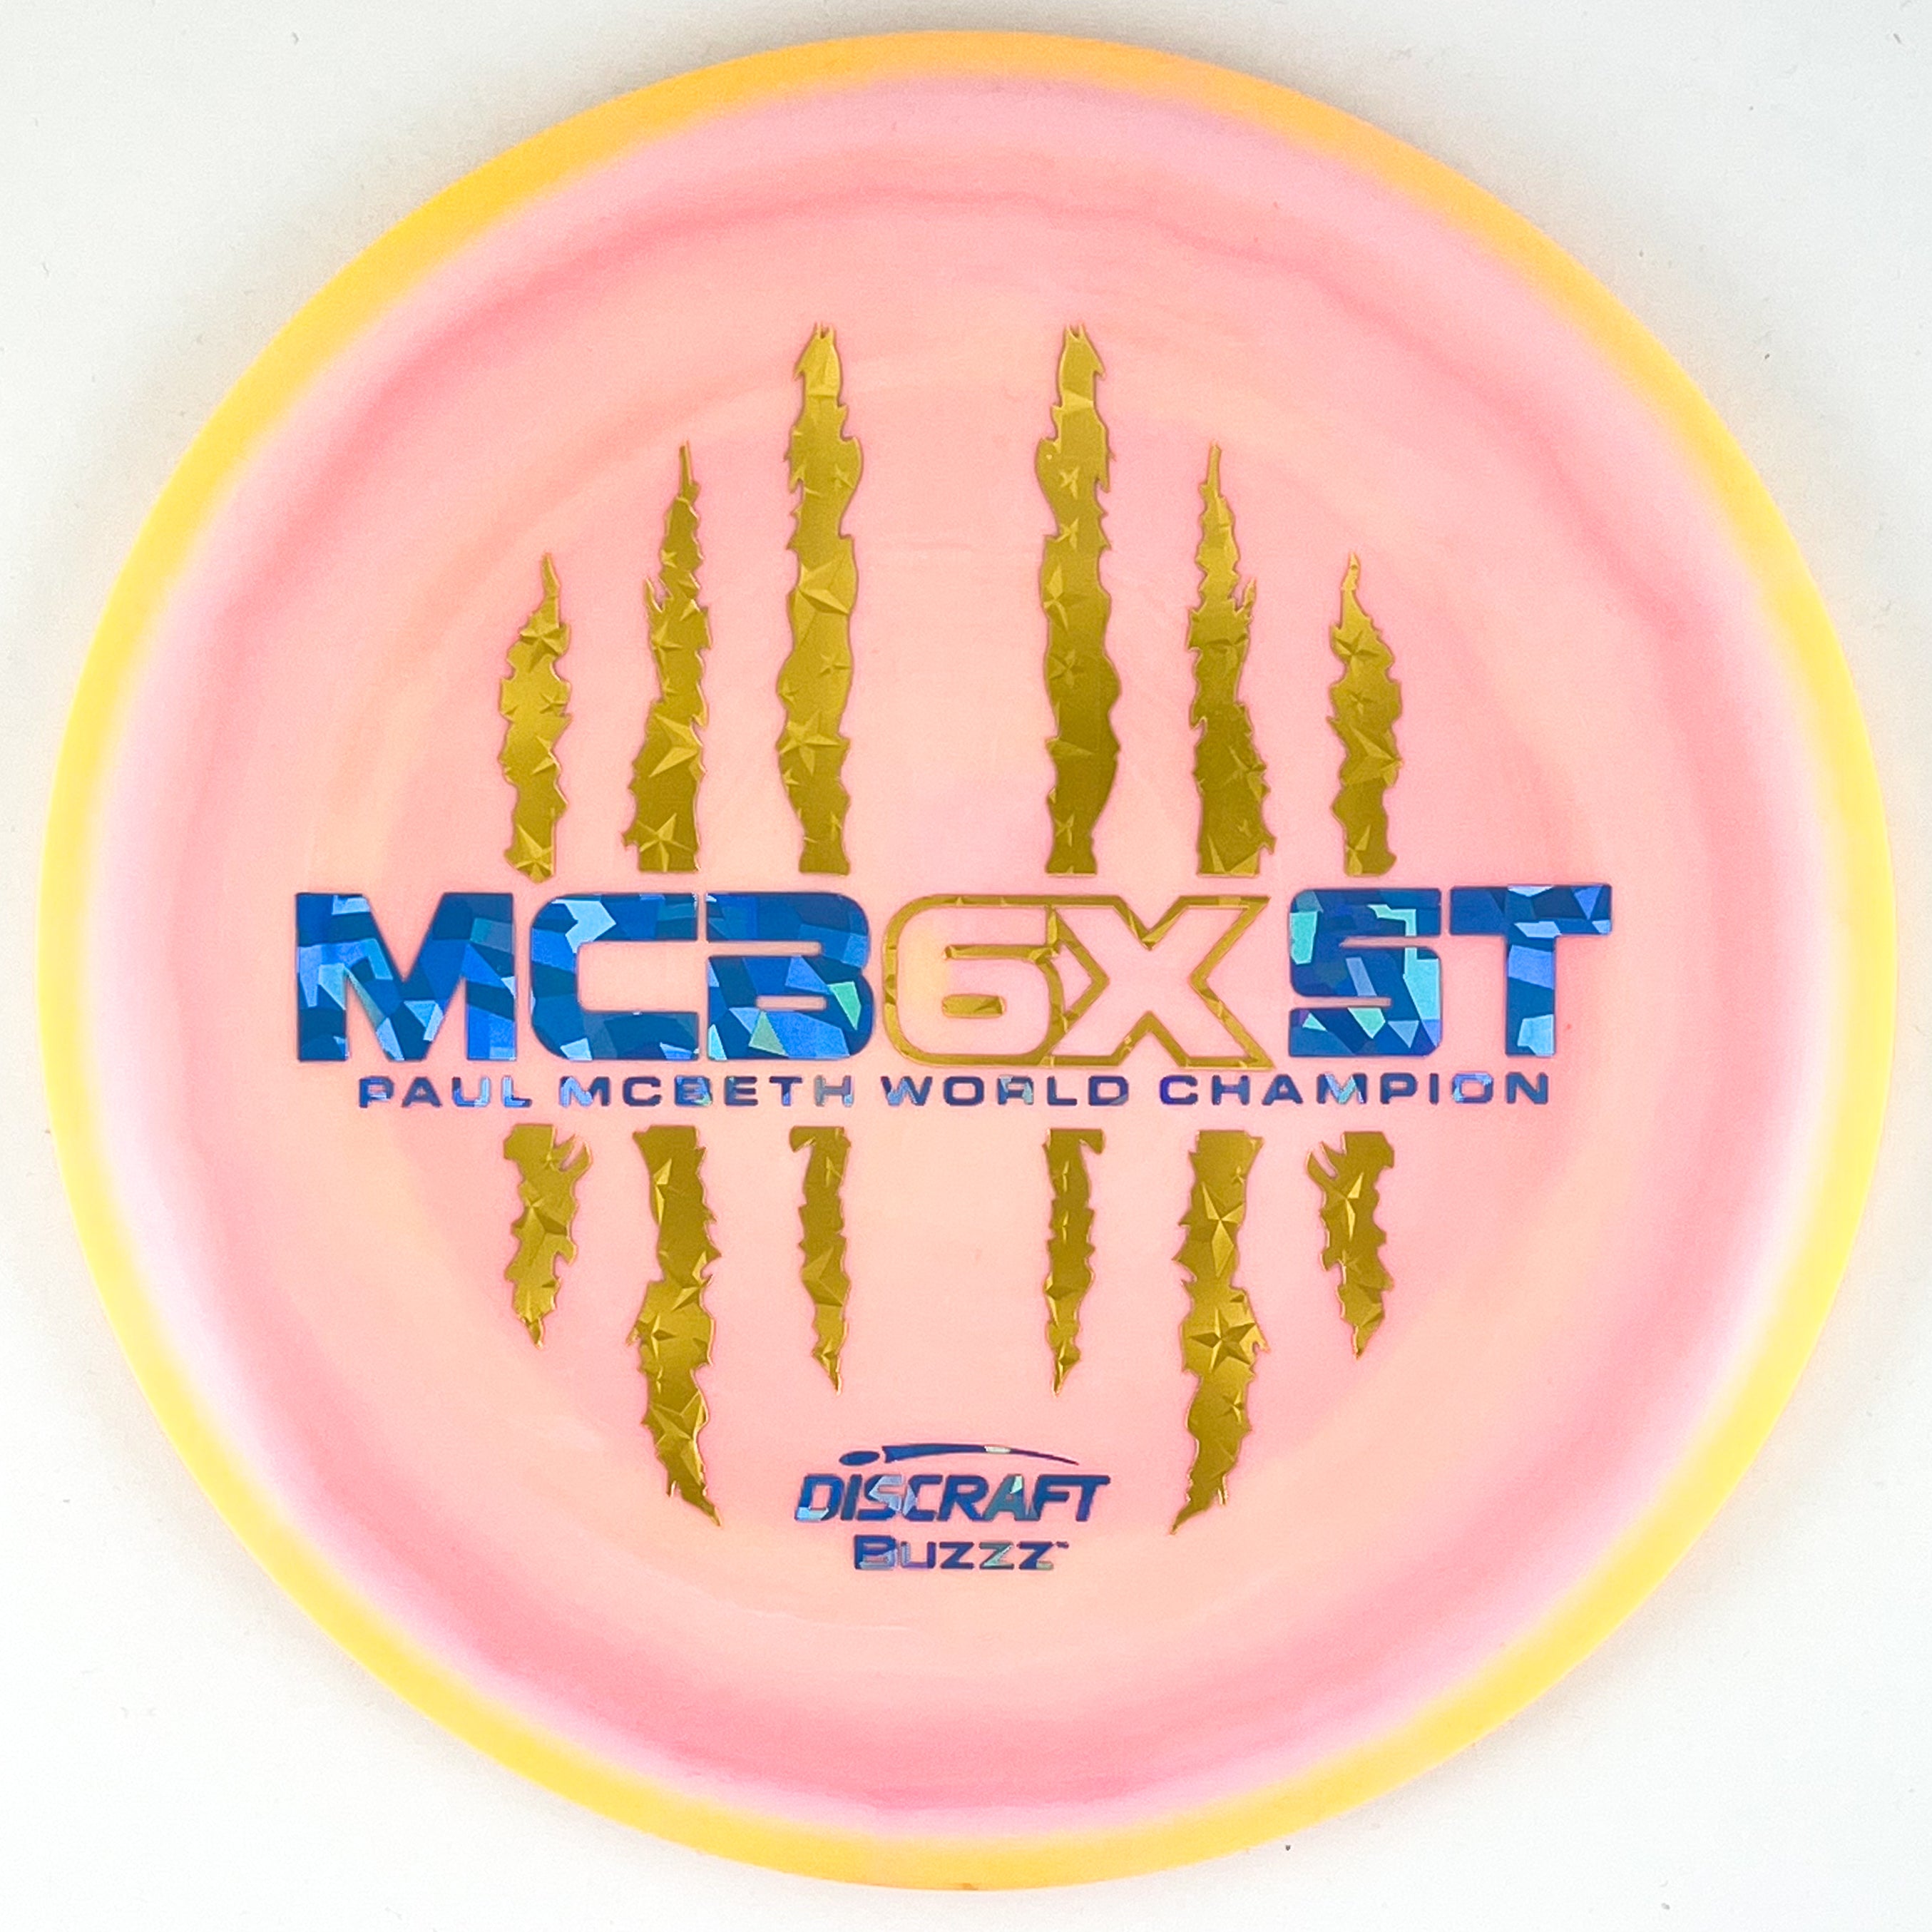 Paul McBeth 6X Claw Commemorative Buzzz